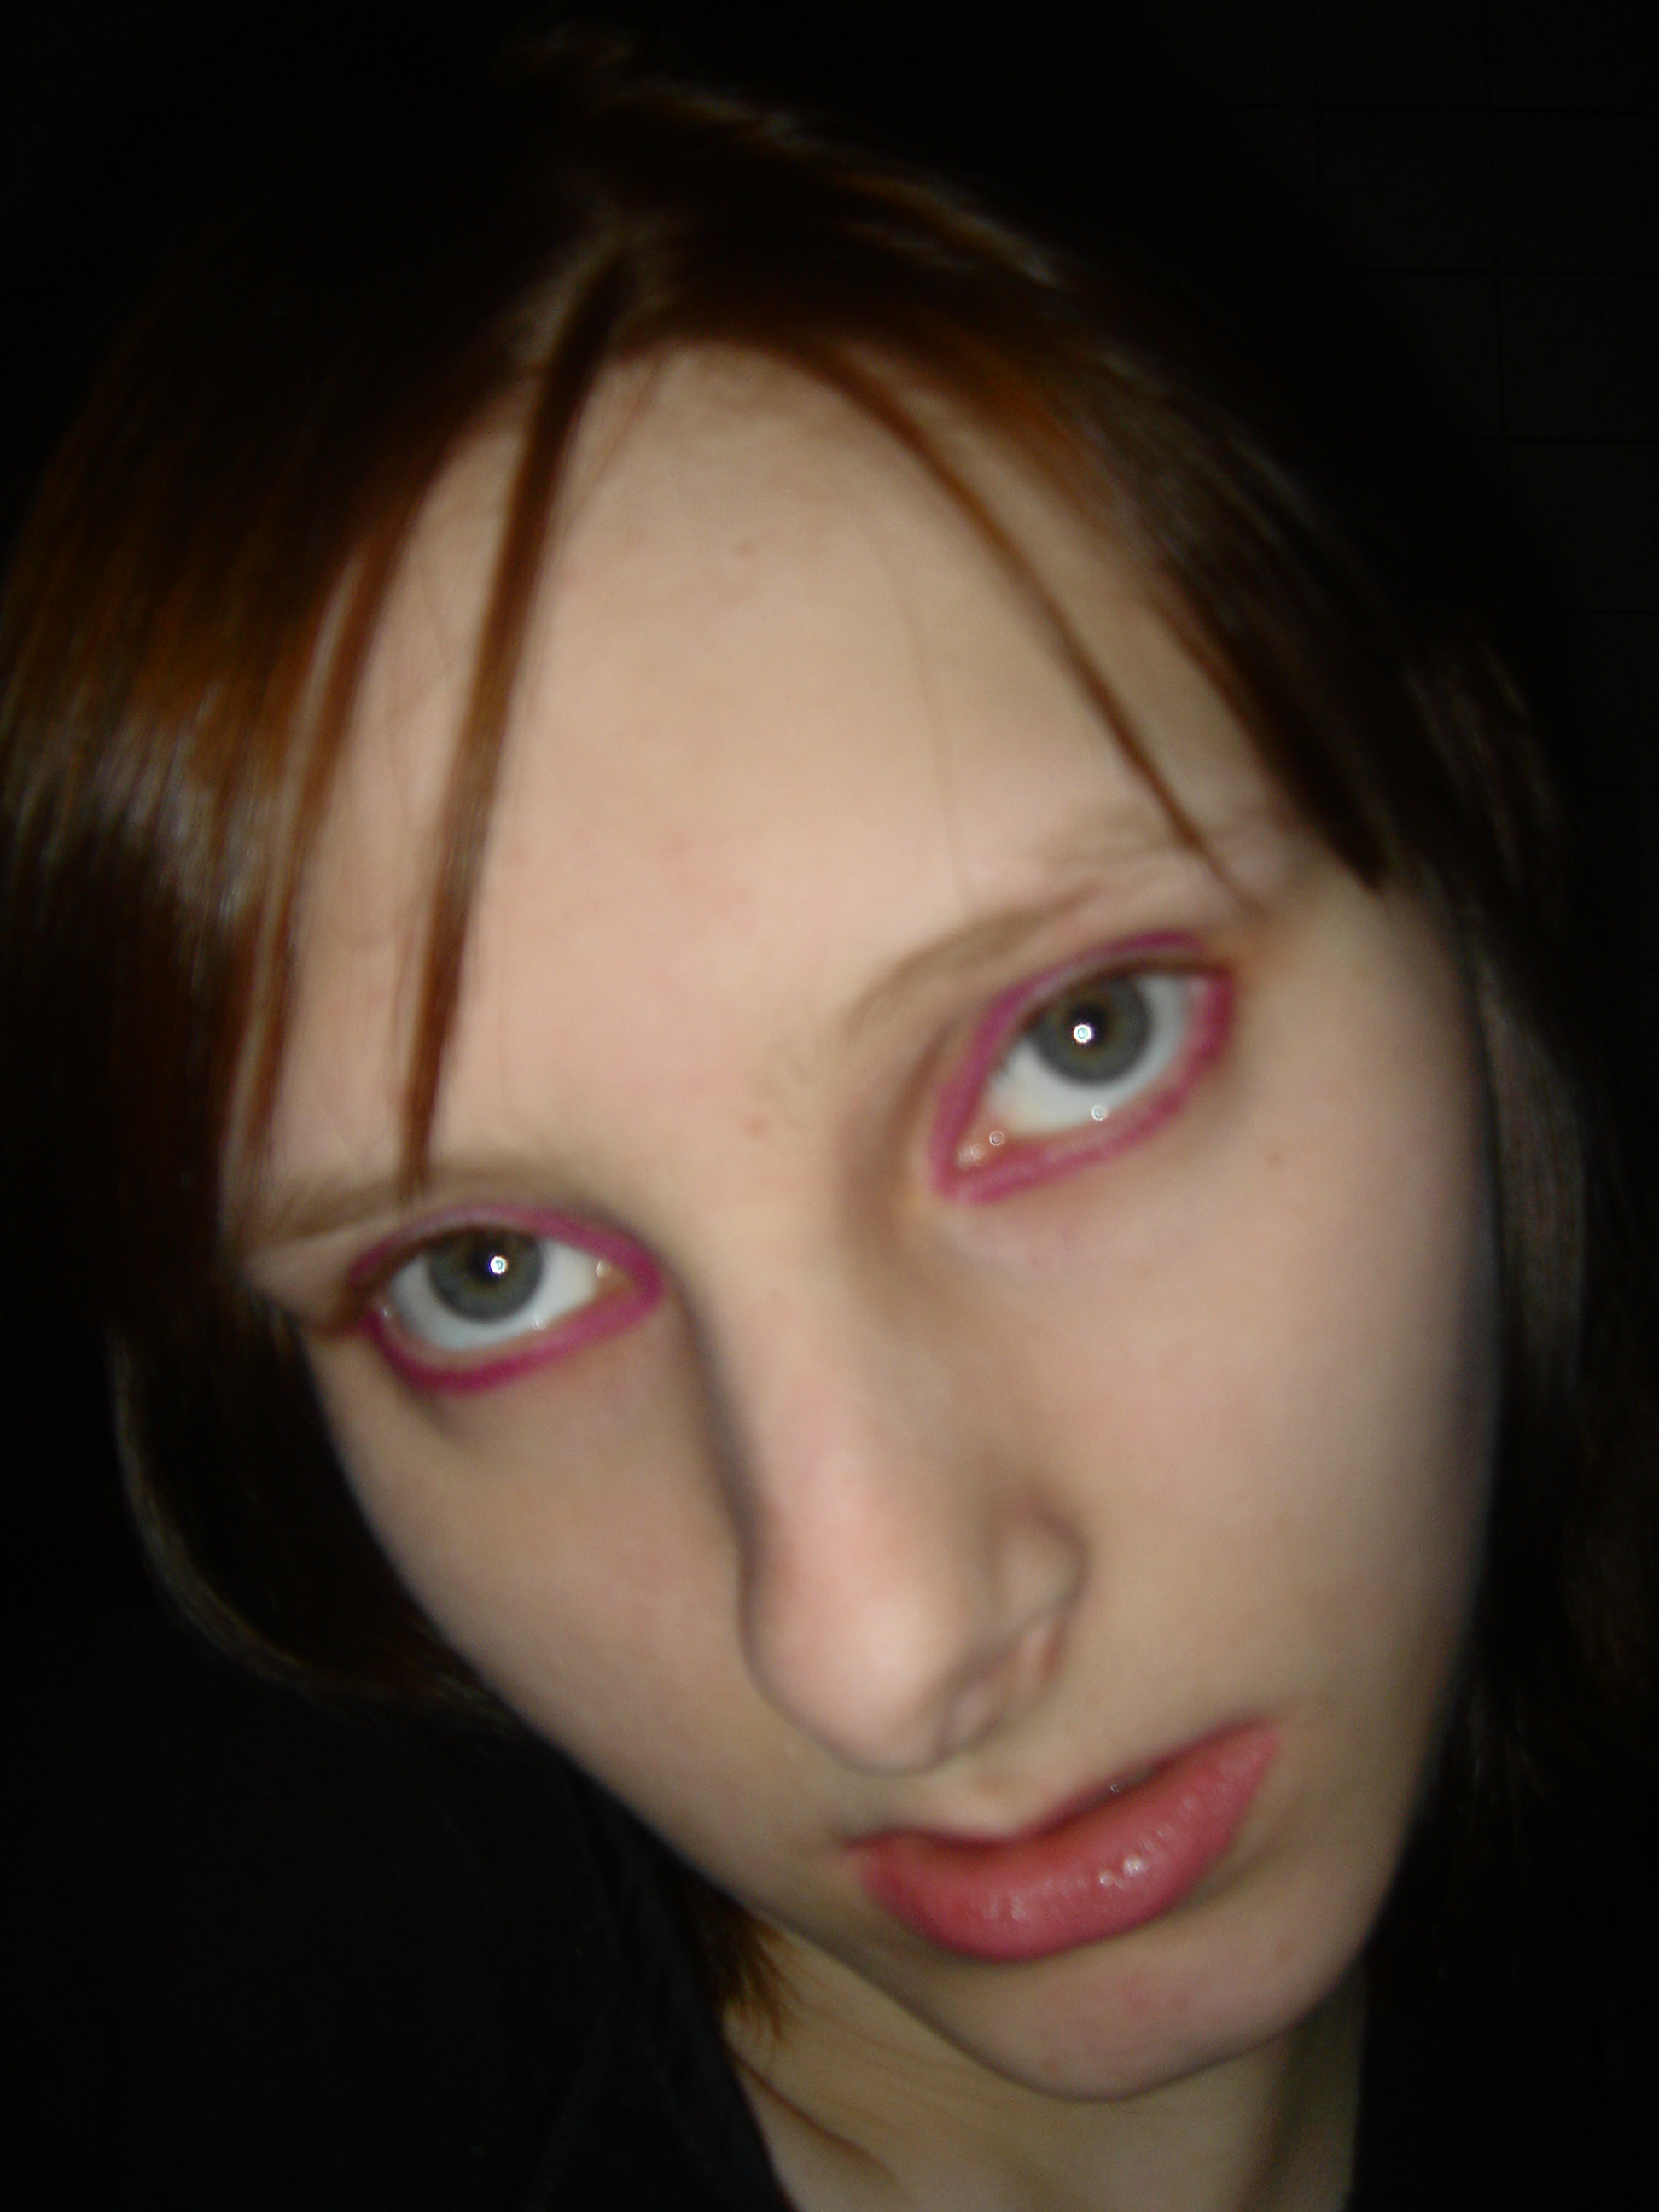 Evil stare by psychotic-doll-stock on DeviantArt